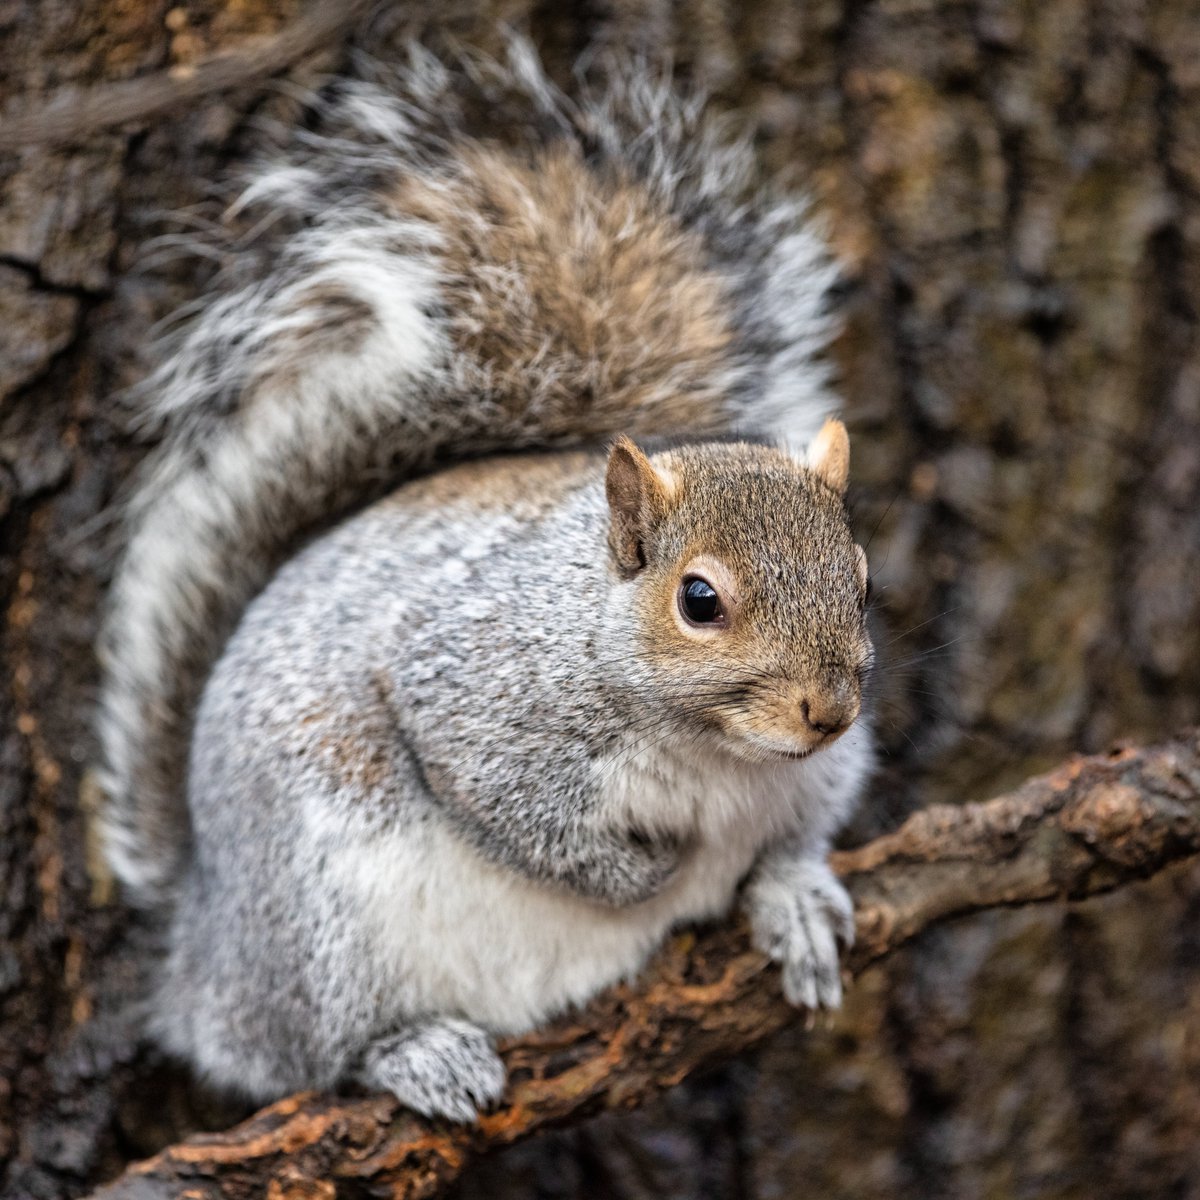 Grey squirrel posing on a branch in the Ramble.

#greysquirrel #squirrel #smallmammals #mammal #wildlife #nature #ramble #centralpark #centralparknyc #wildlifephotography #naturephotography #newyork #newyorkcity